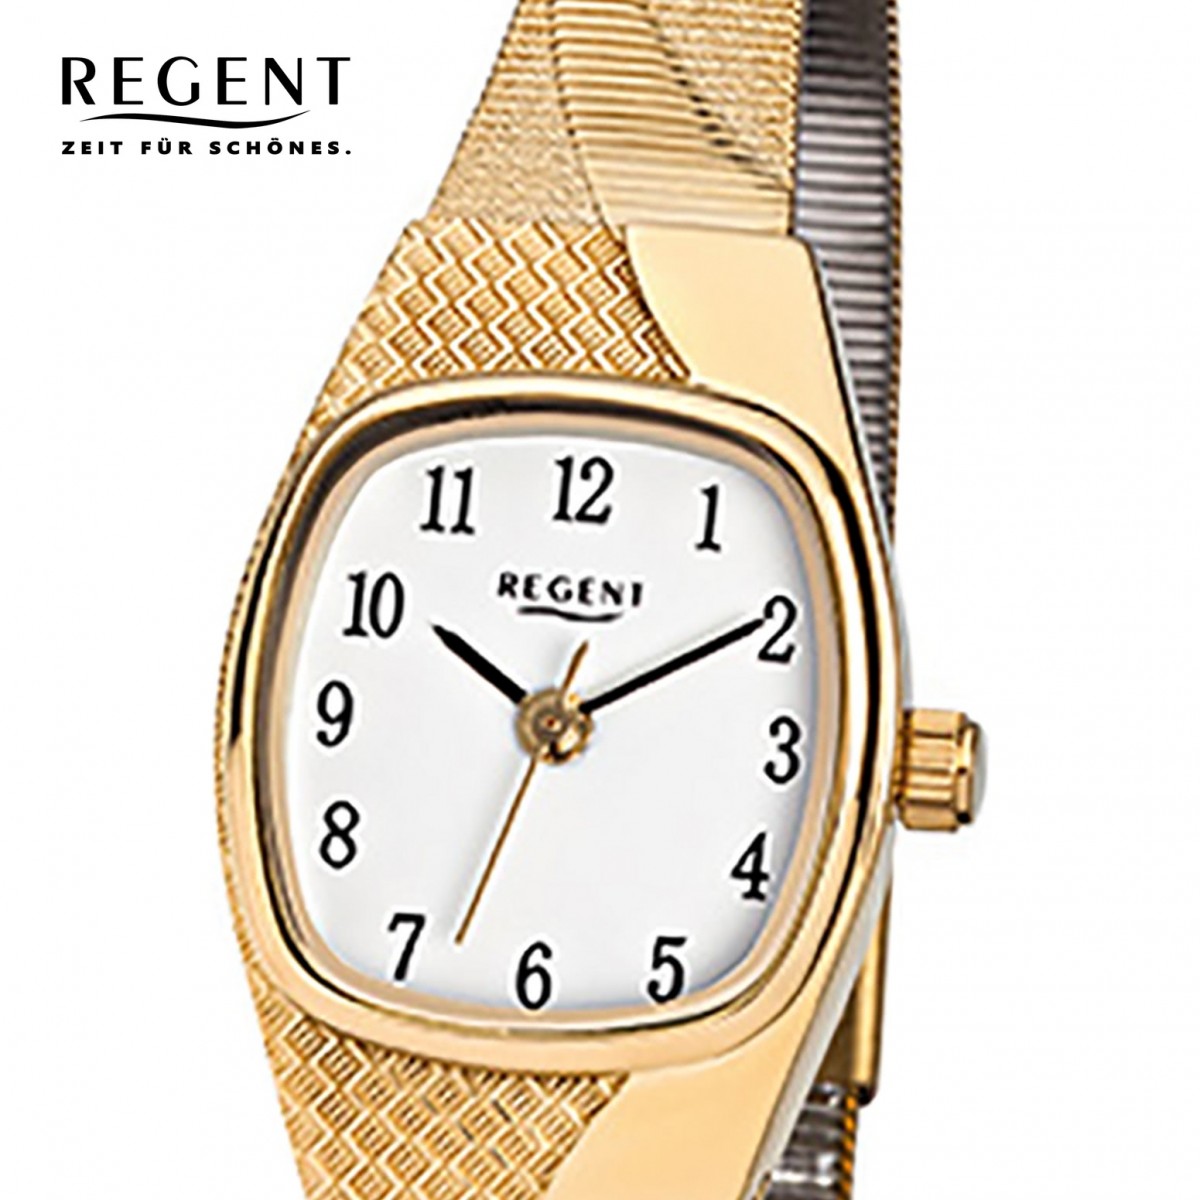 Metallarmband Regent - URF624 gold Quarzwerk - Damen-Uhr - Edelstahl